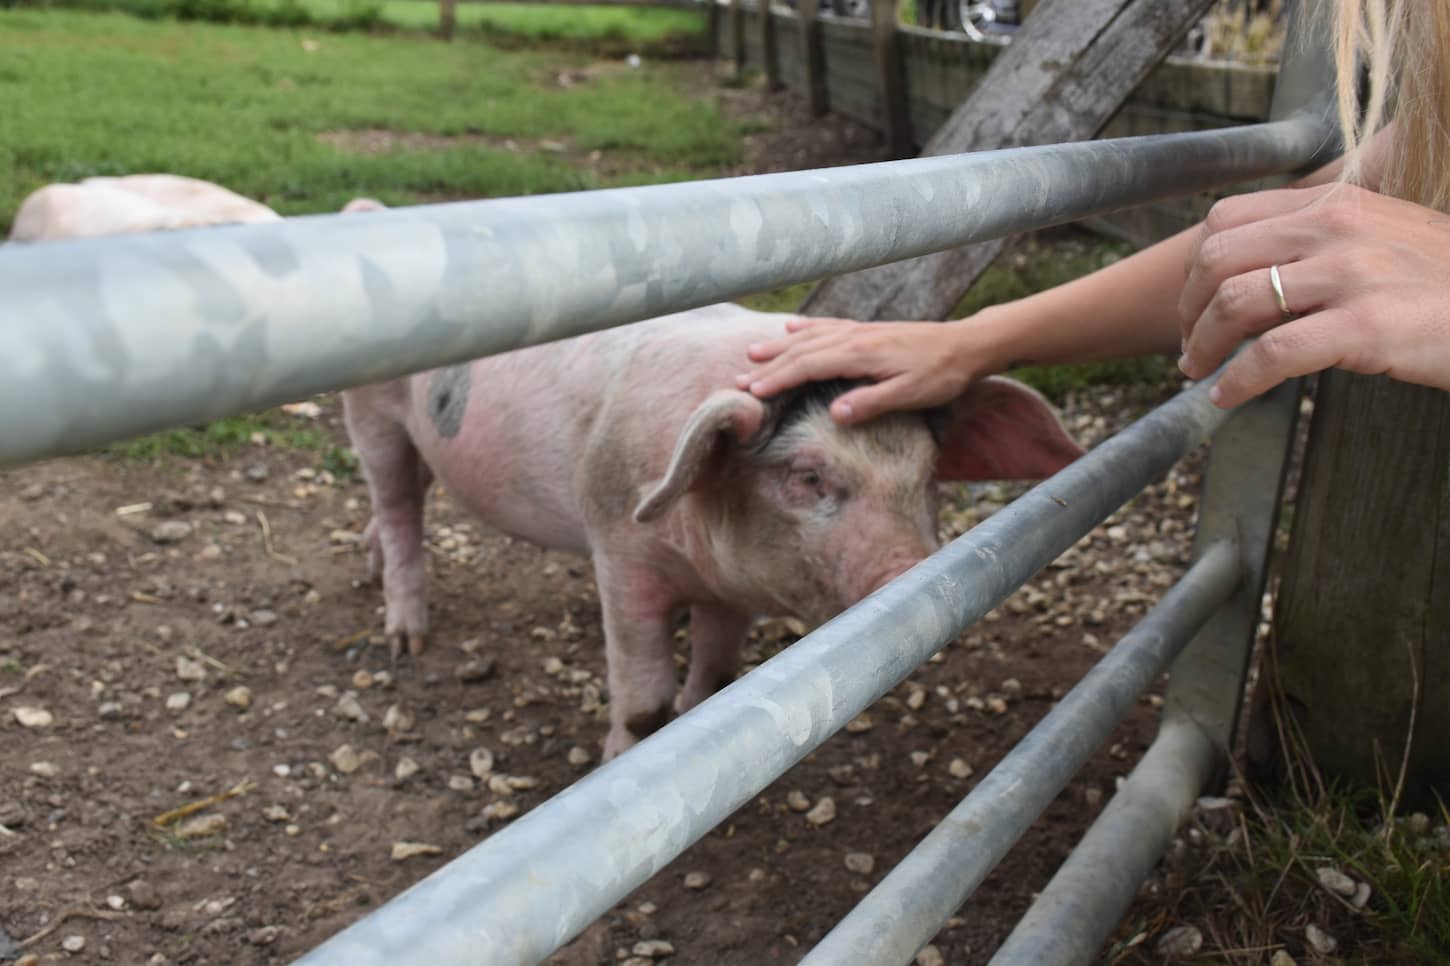 An image of a human hand petting a farmyard piglet.